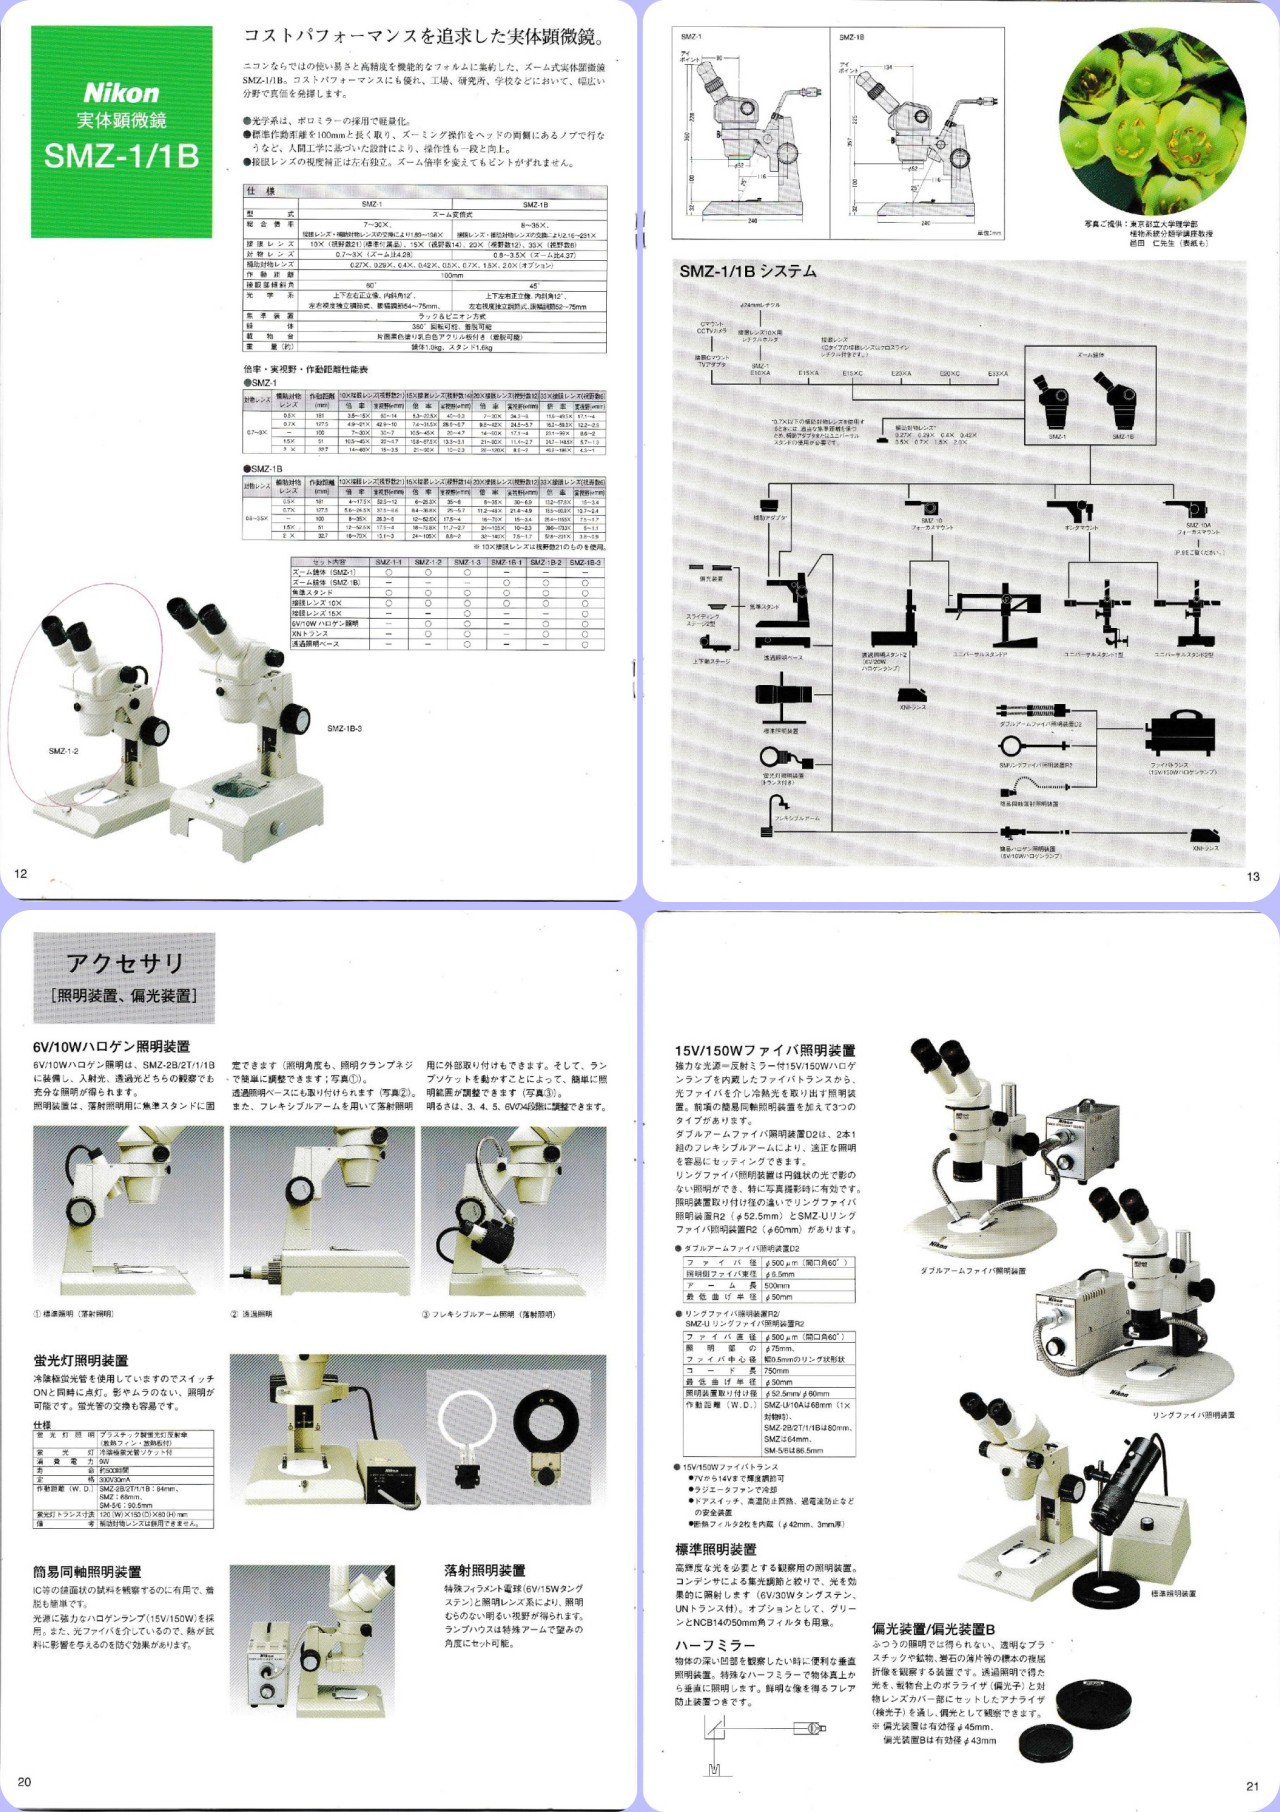 E765] ニコン 実体顕微鏡 SMZ-1B ユニバーサルスタンド・蛍光灯リング